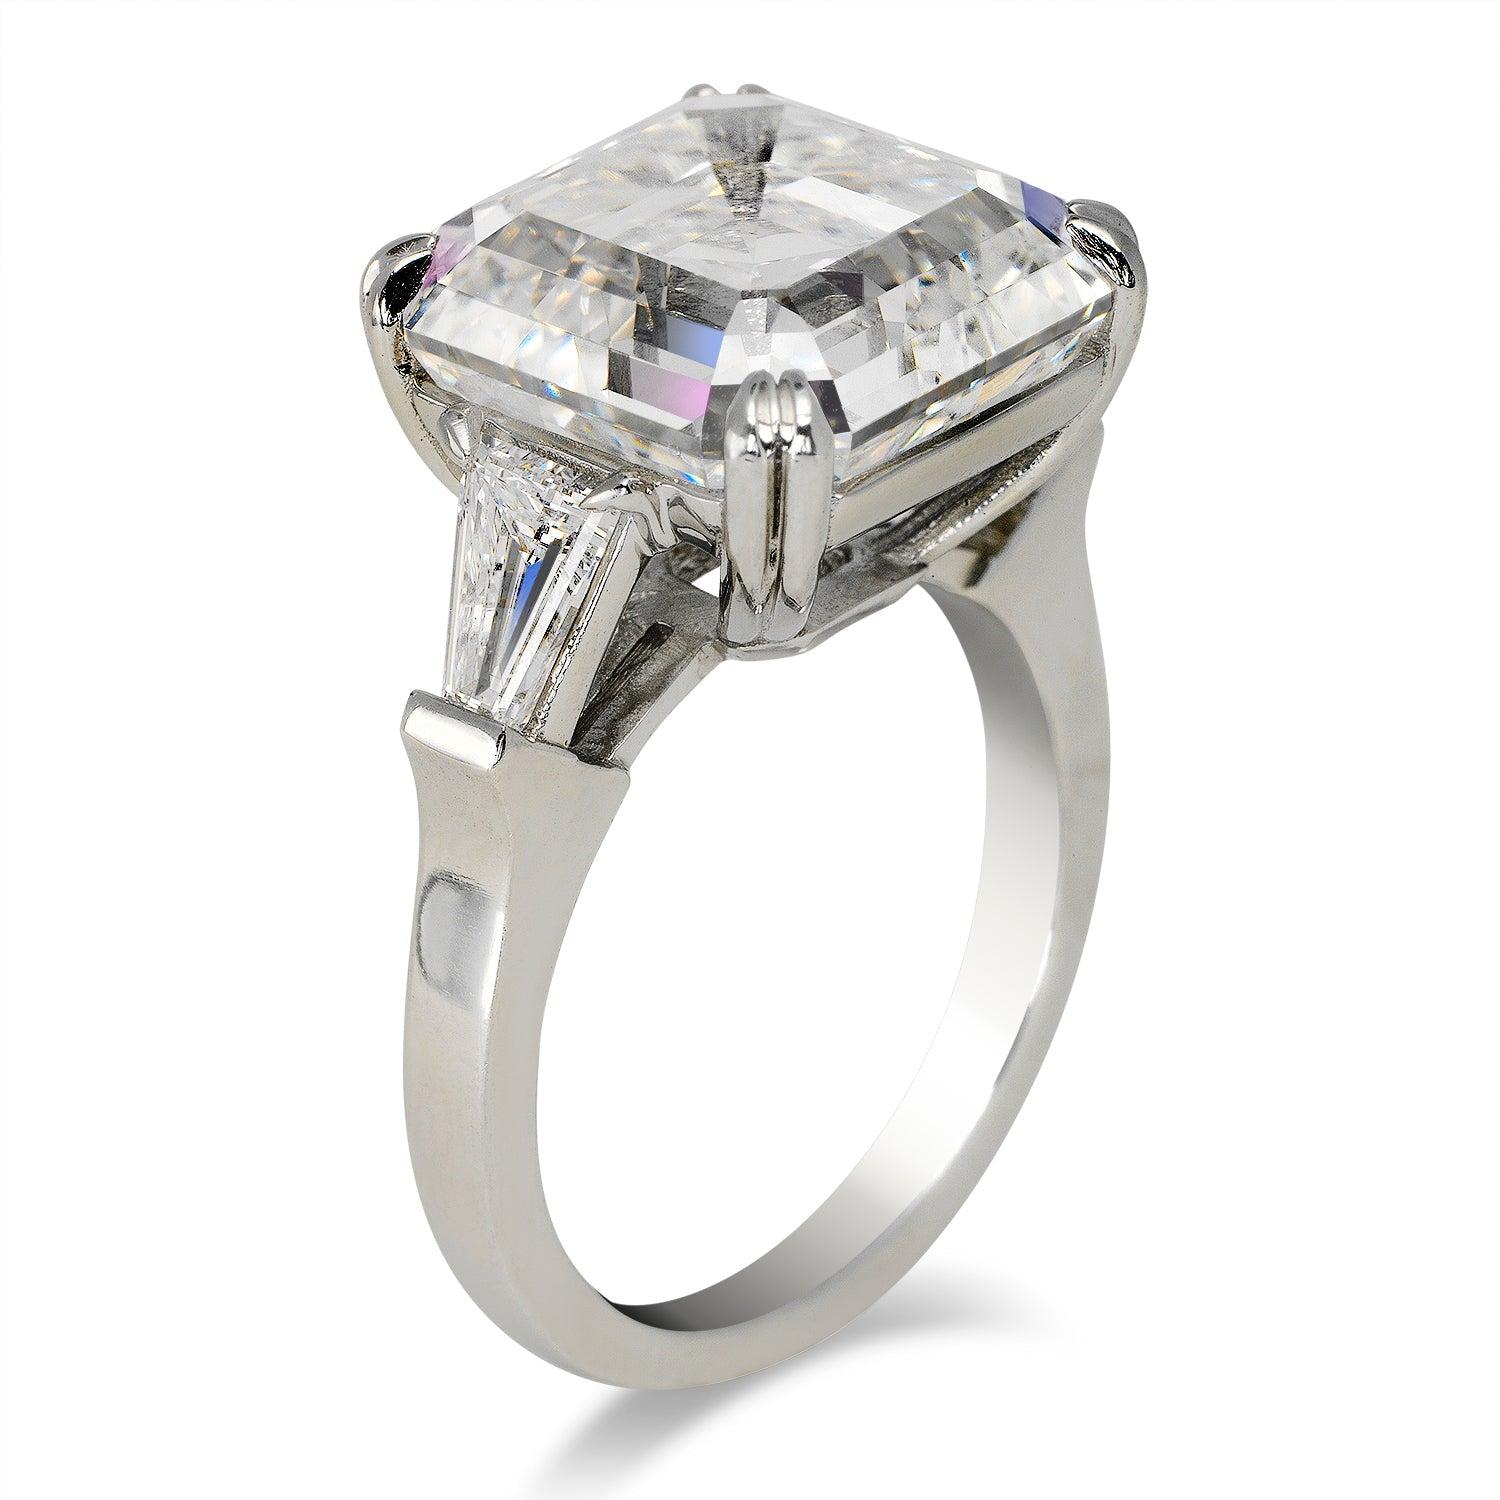 13 carat diamond ring